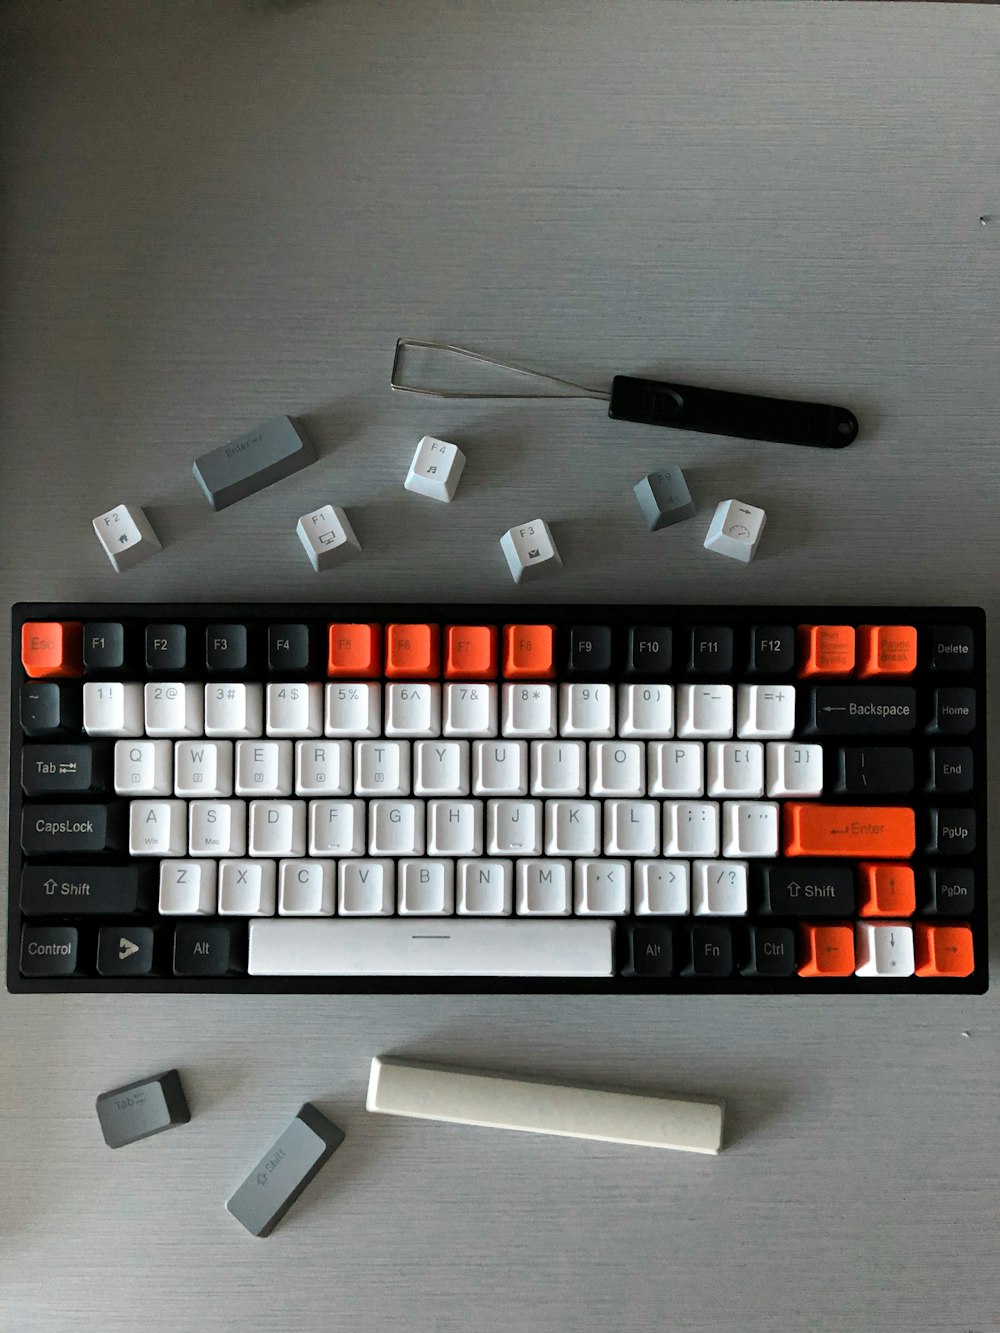 teclado de computador preto e branco